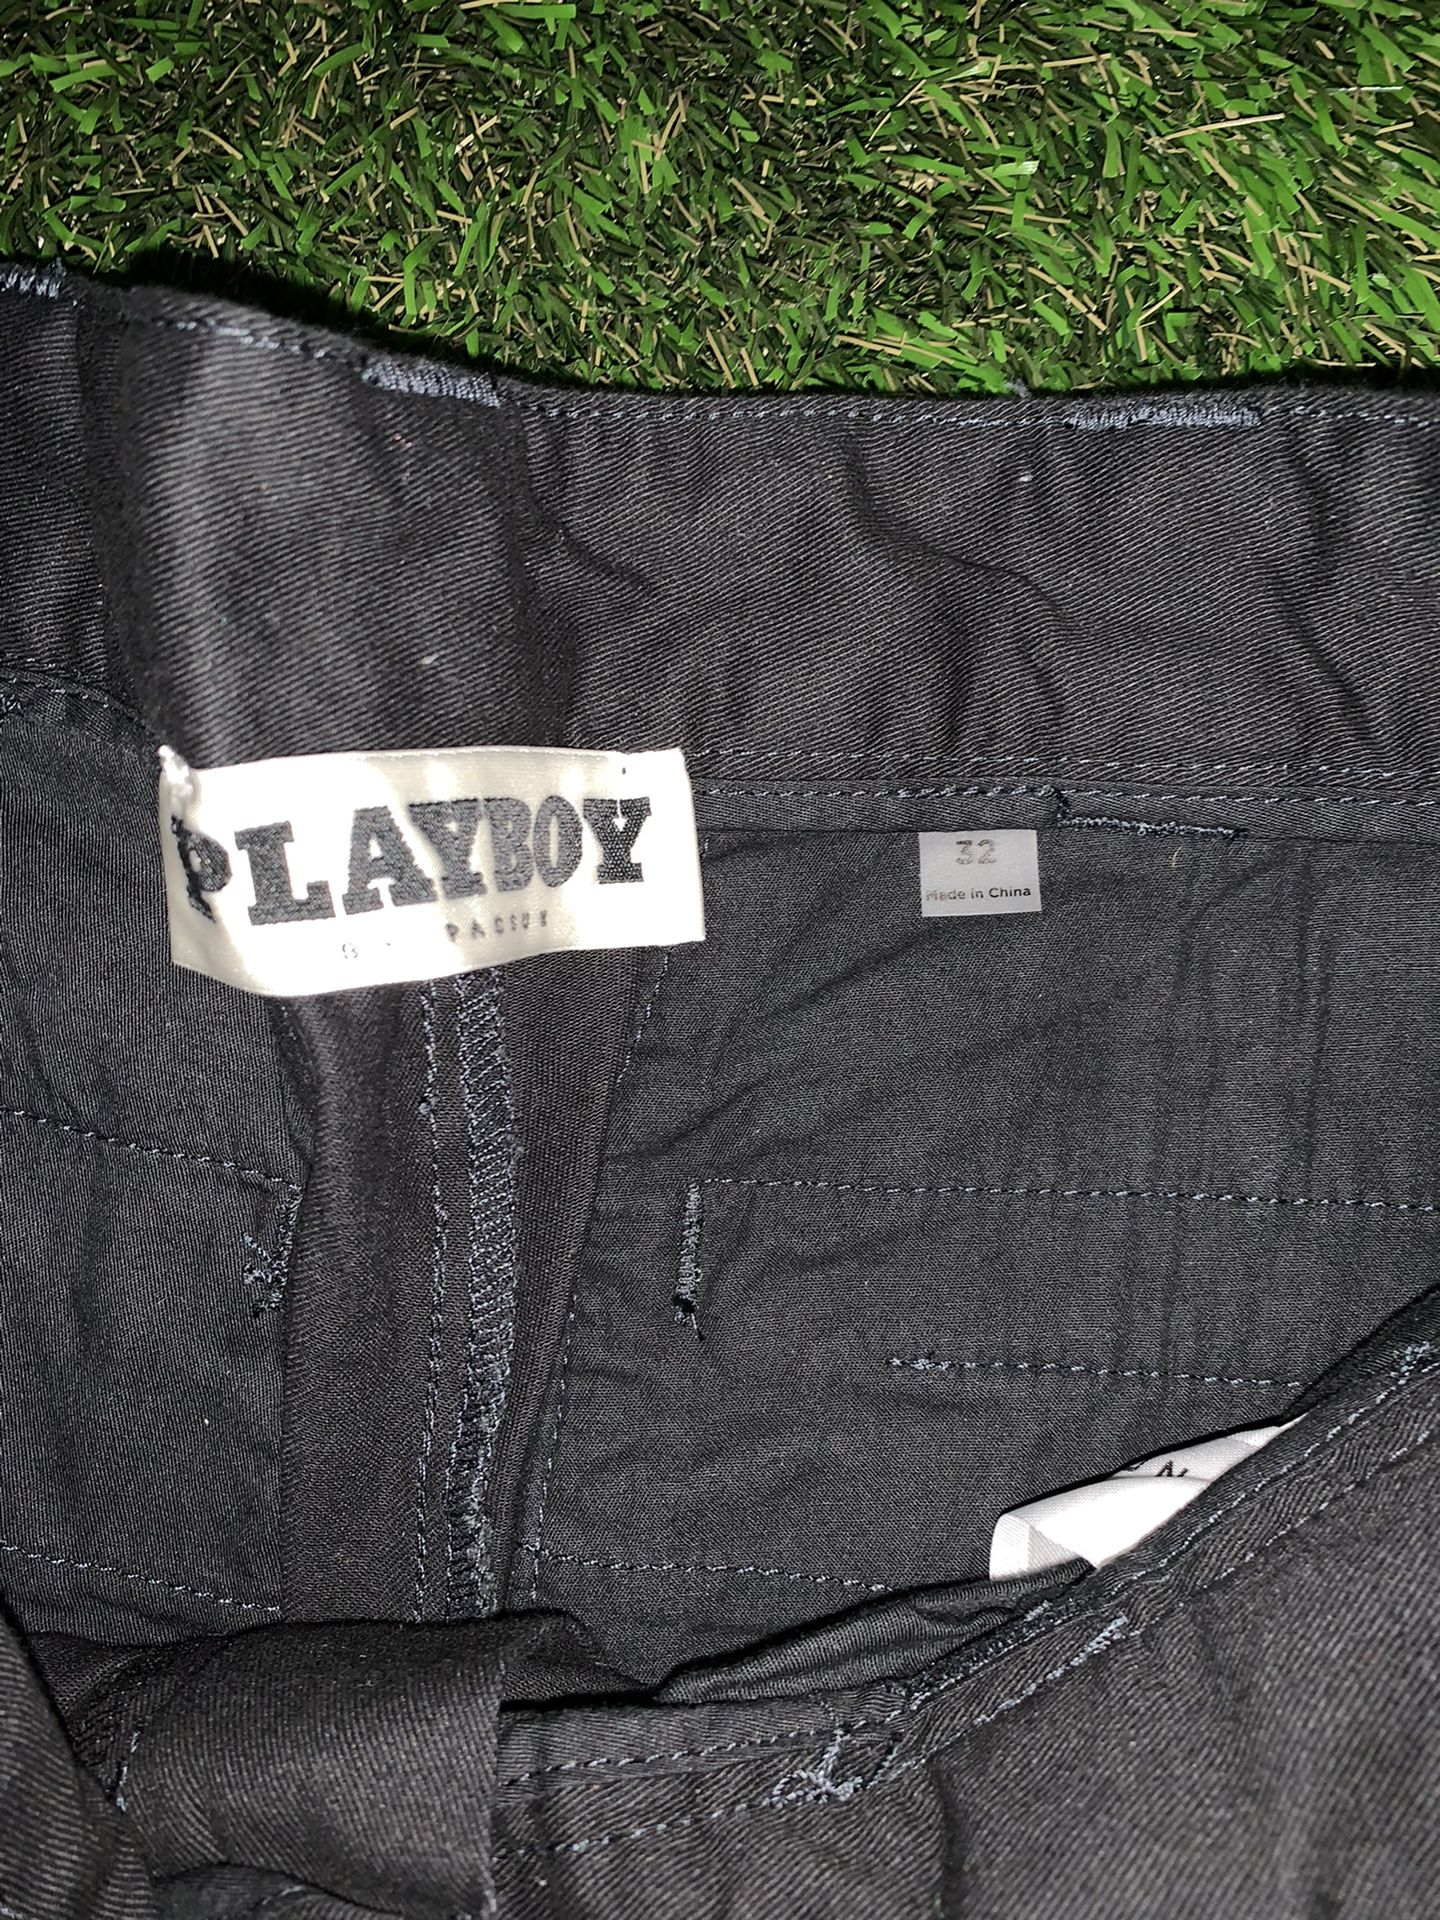 Playboy pants warm once brand new